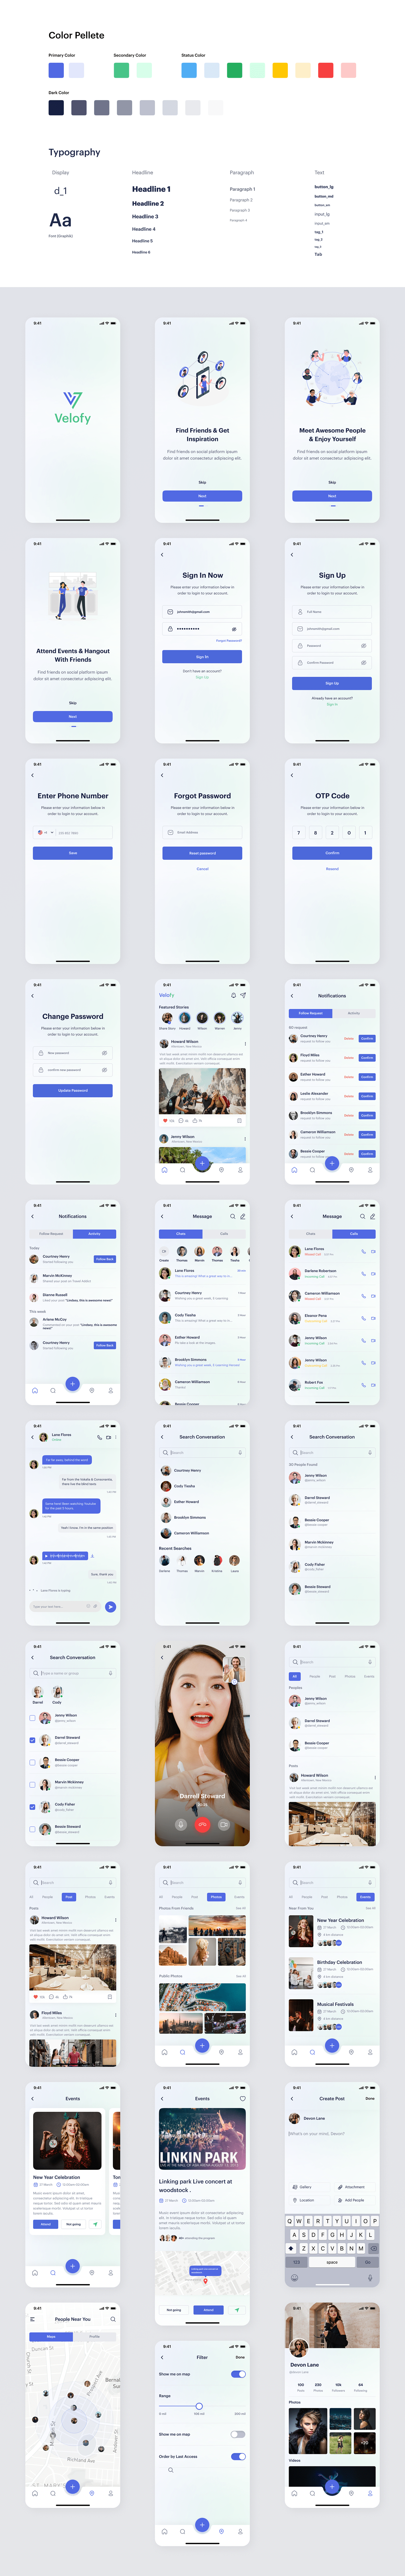 
UI UX design for Social Media Mobile App
with Clean UI 
